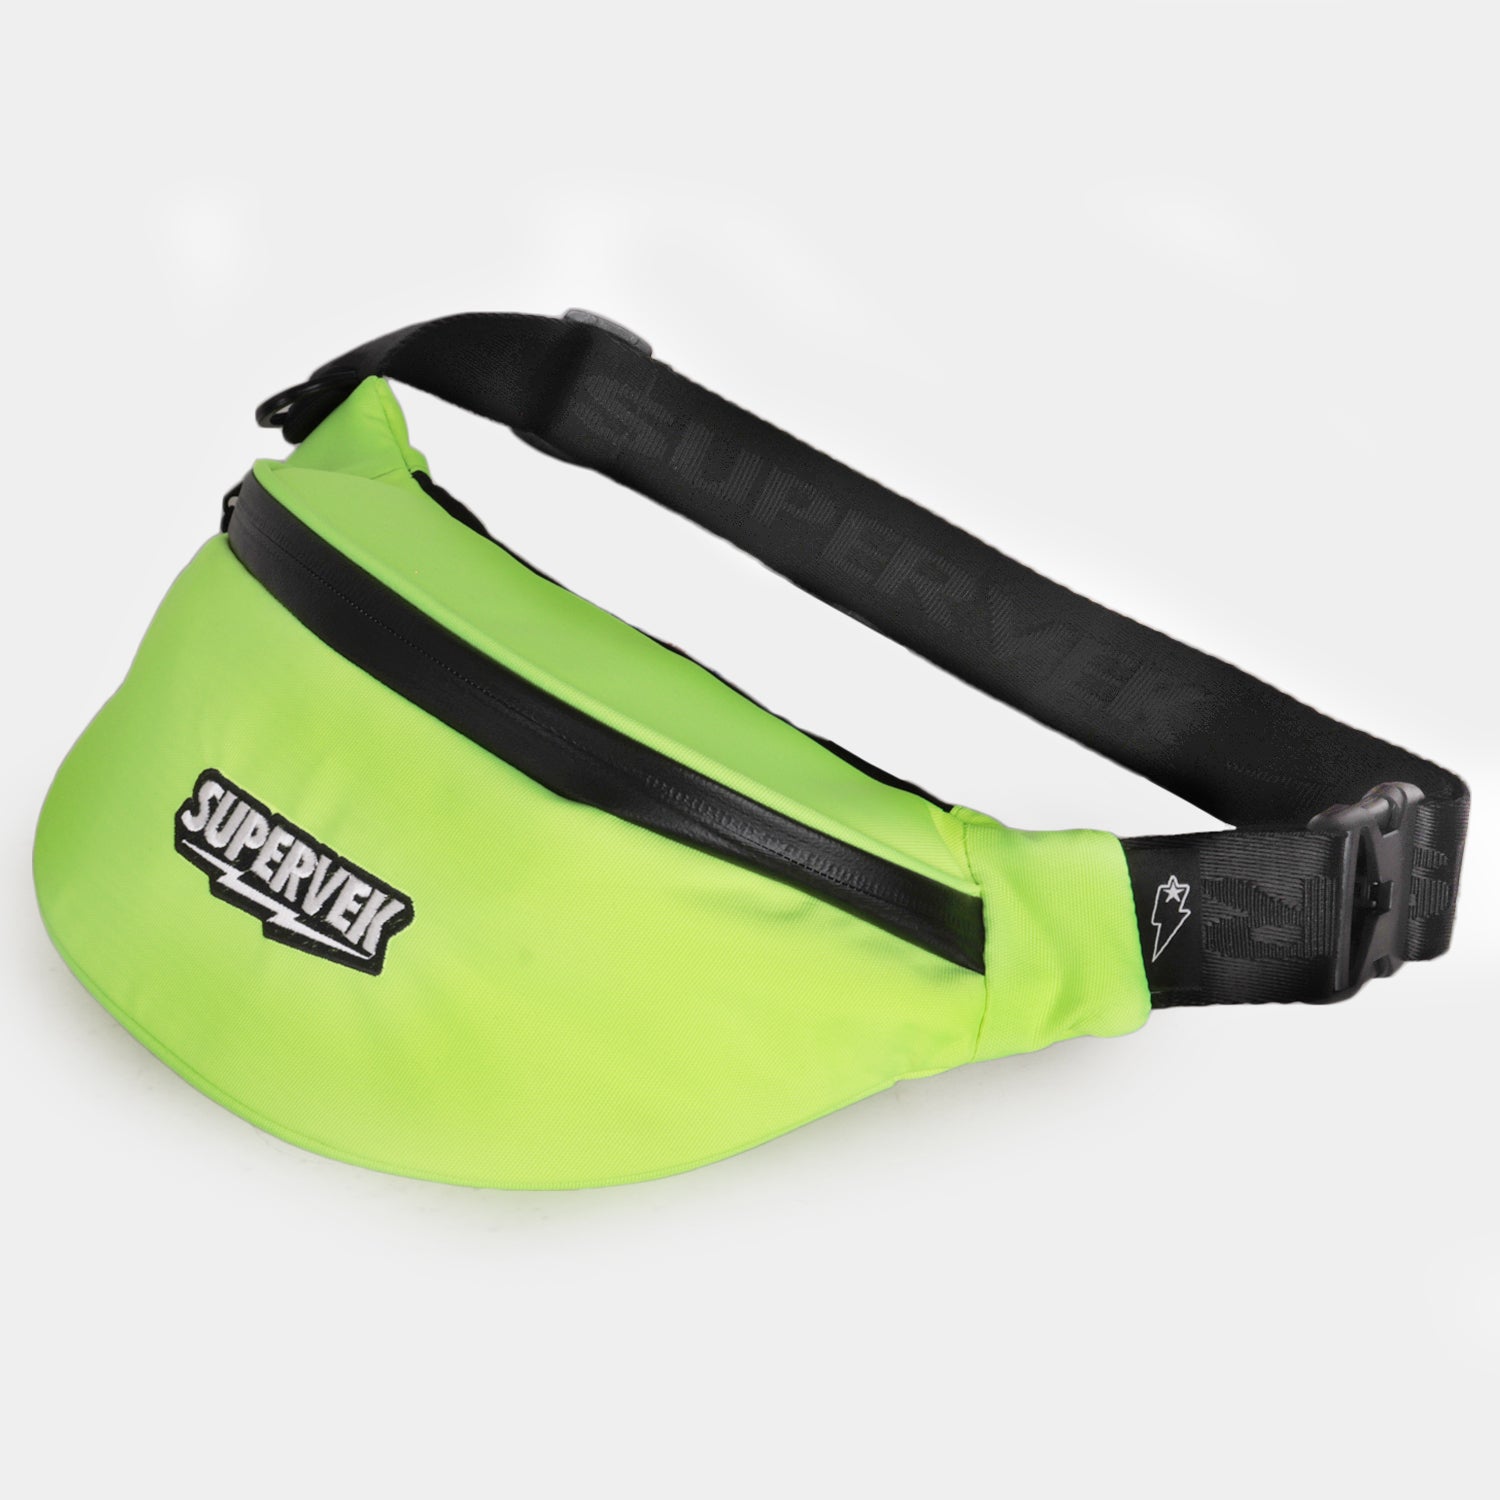 Supervek Crossbody Slinger - Vetric Lime - Urban Functional Fanny Hip Bag for Everyday Essentials - Product Shot